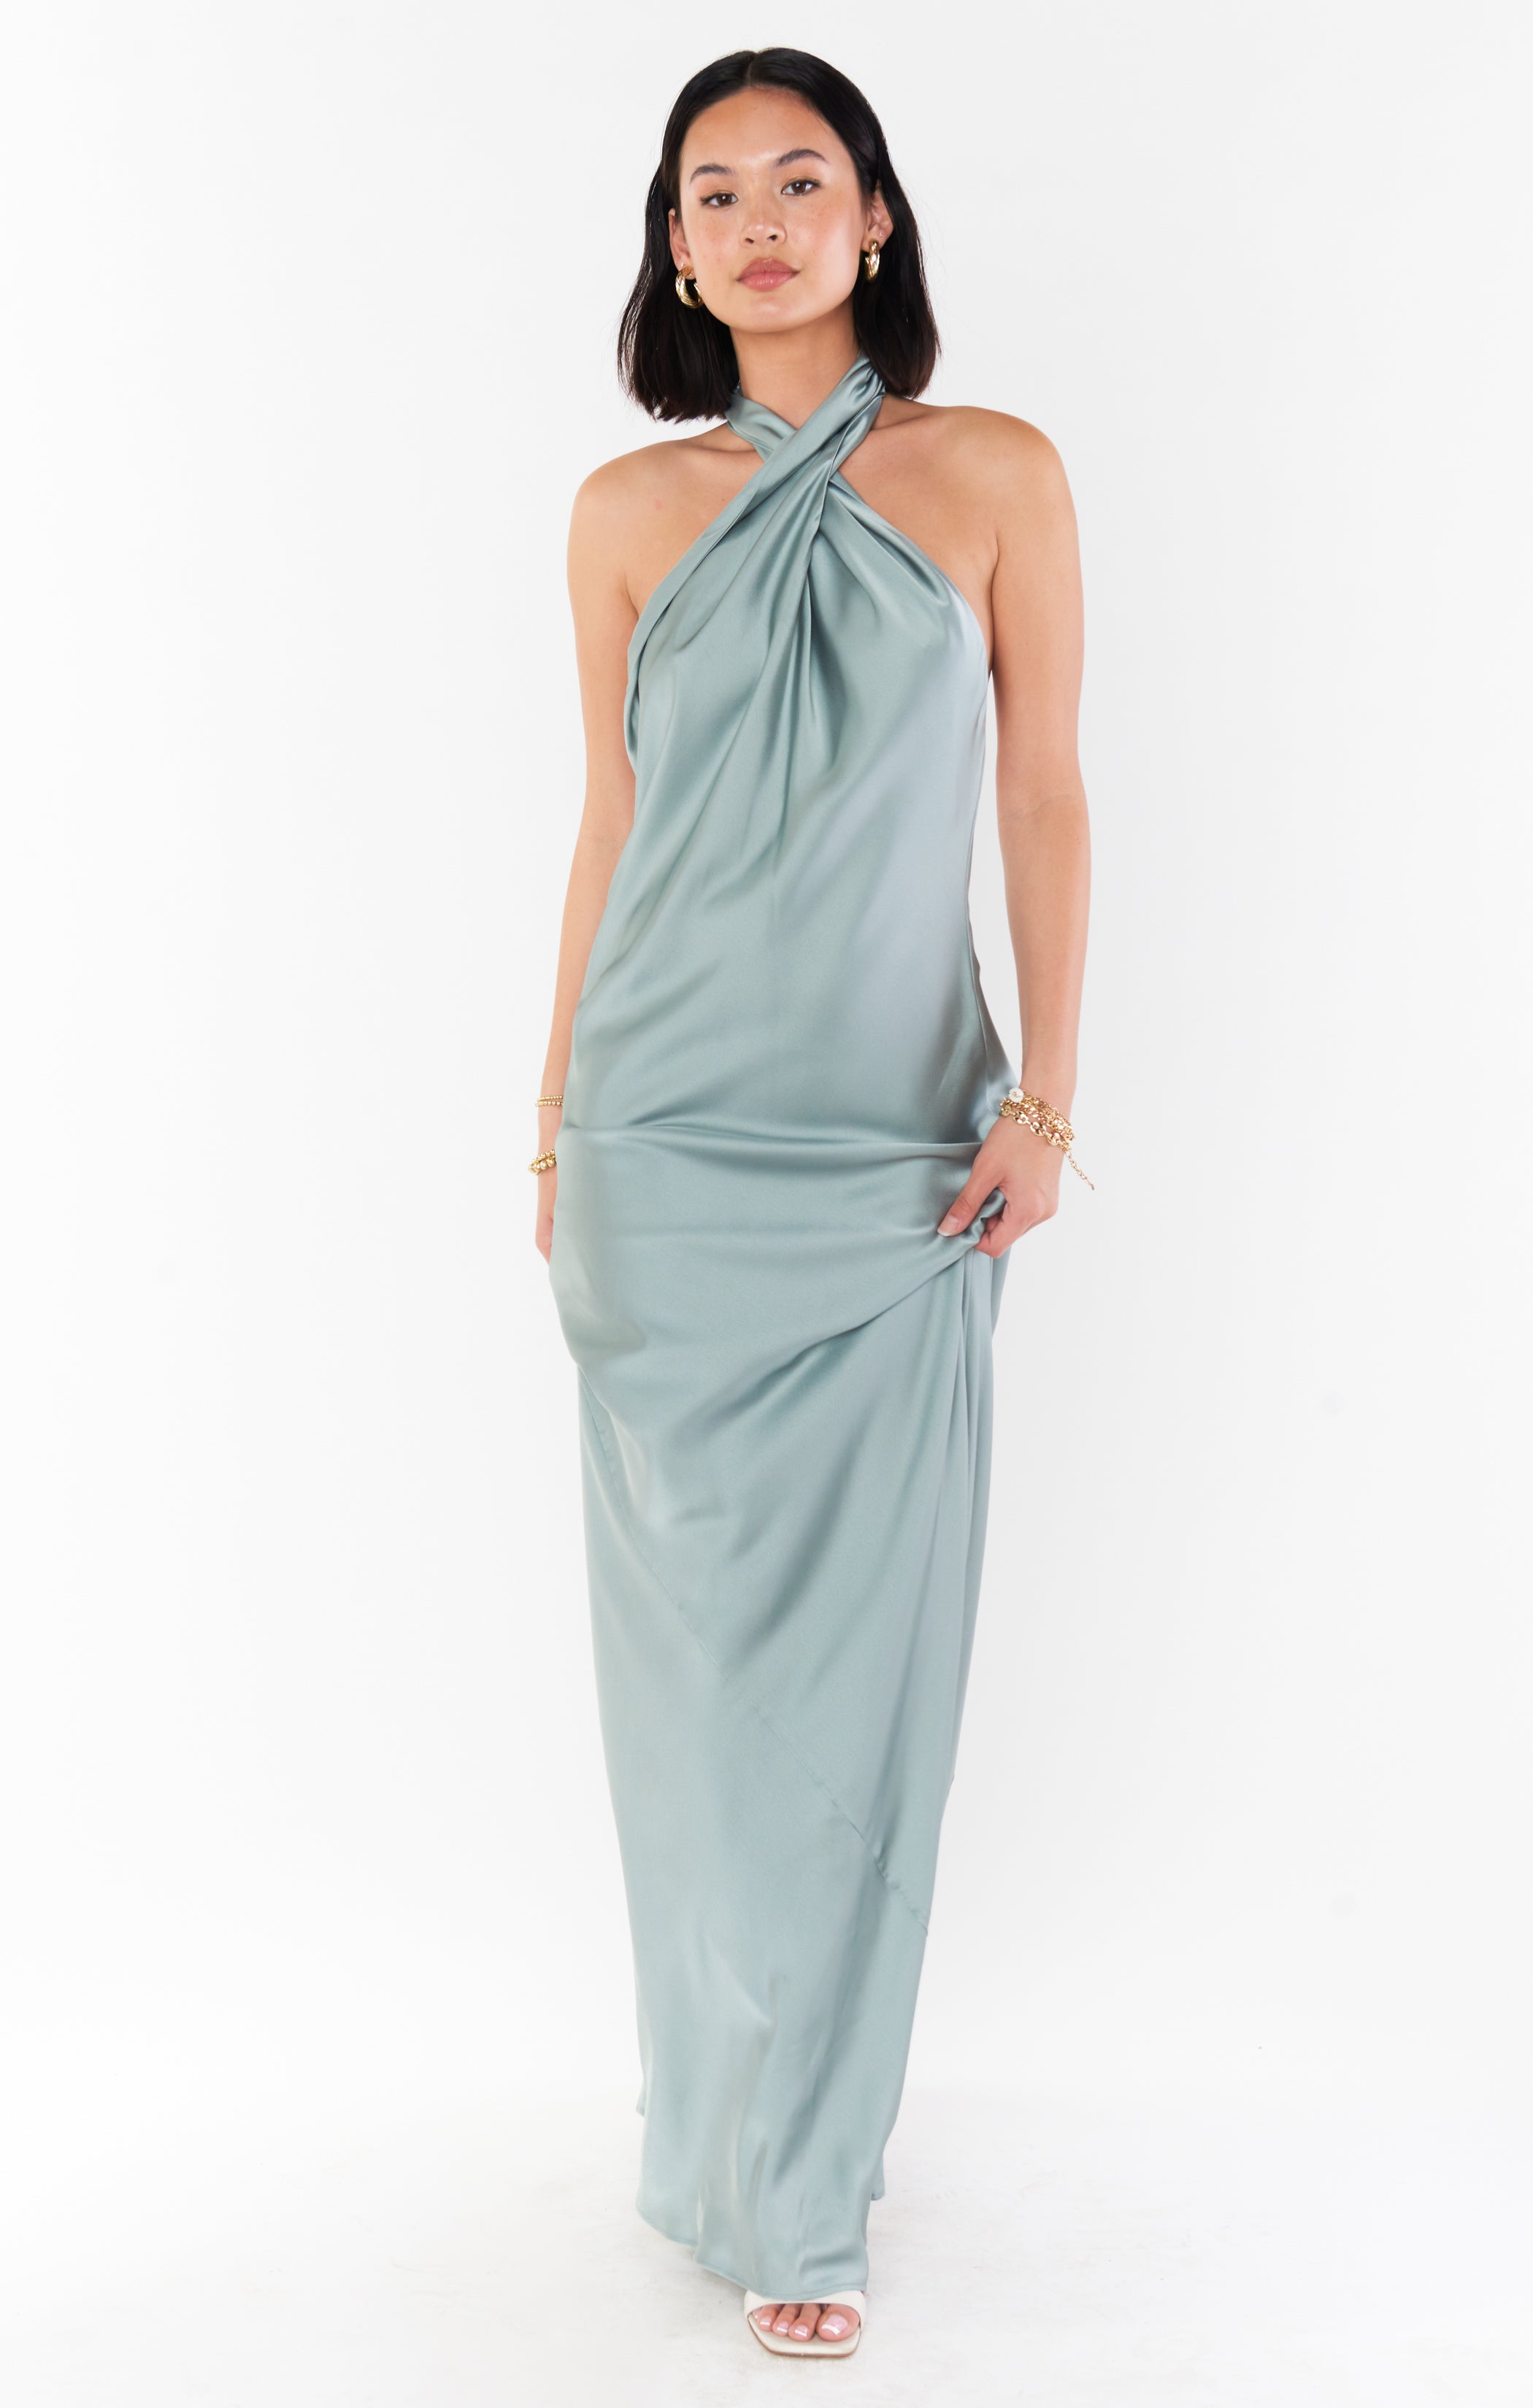 Brand New Zara Green Satin Dress XS, Wedding Guest